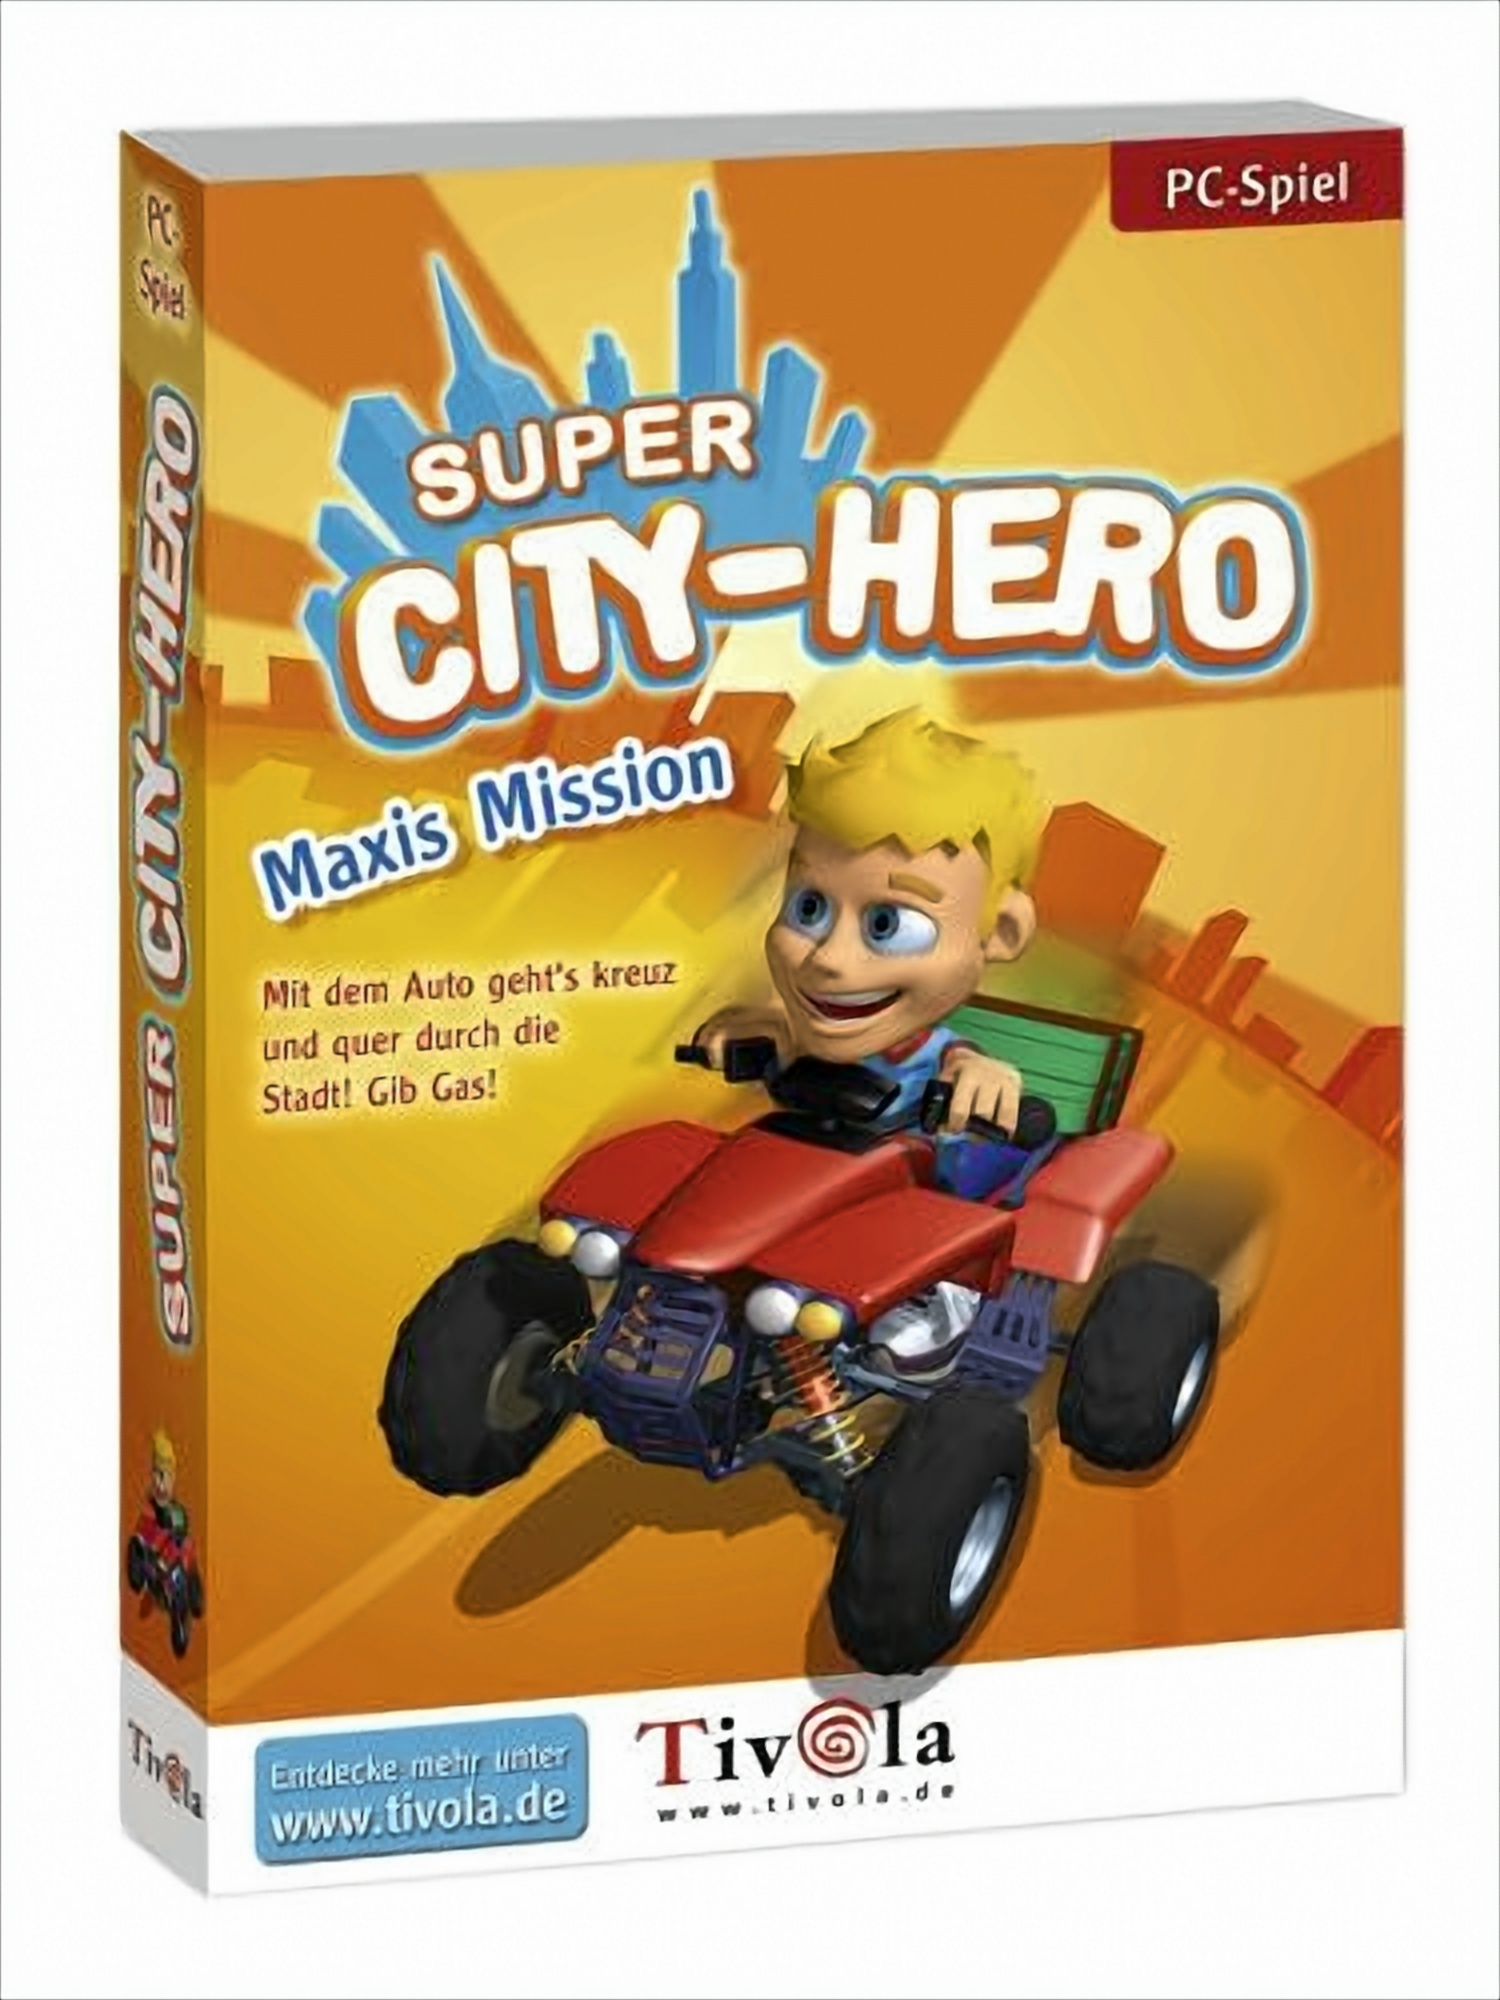 Mission [PC] - Maxis Super City Hero: